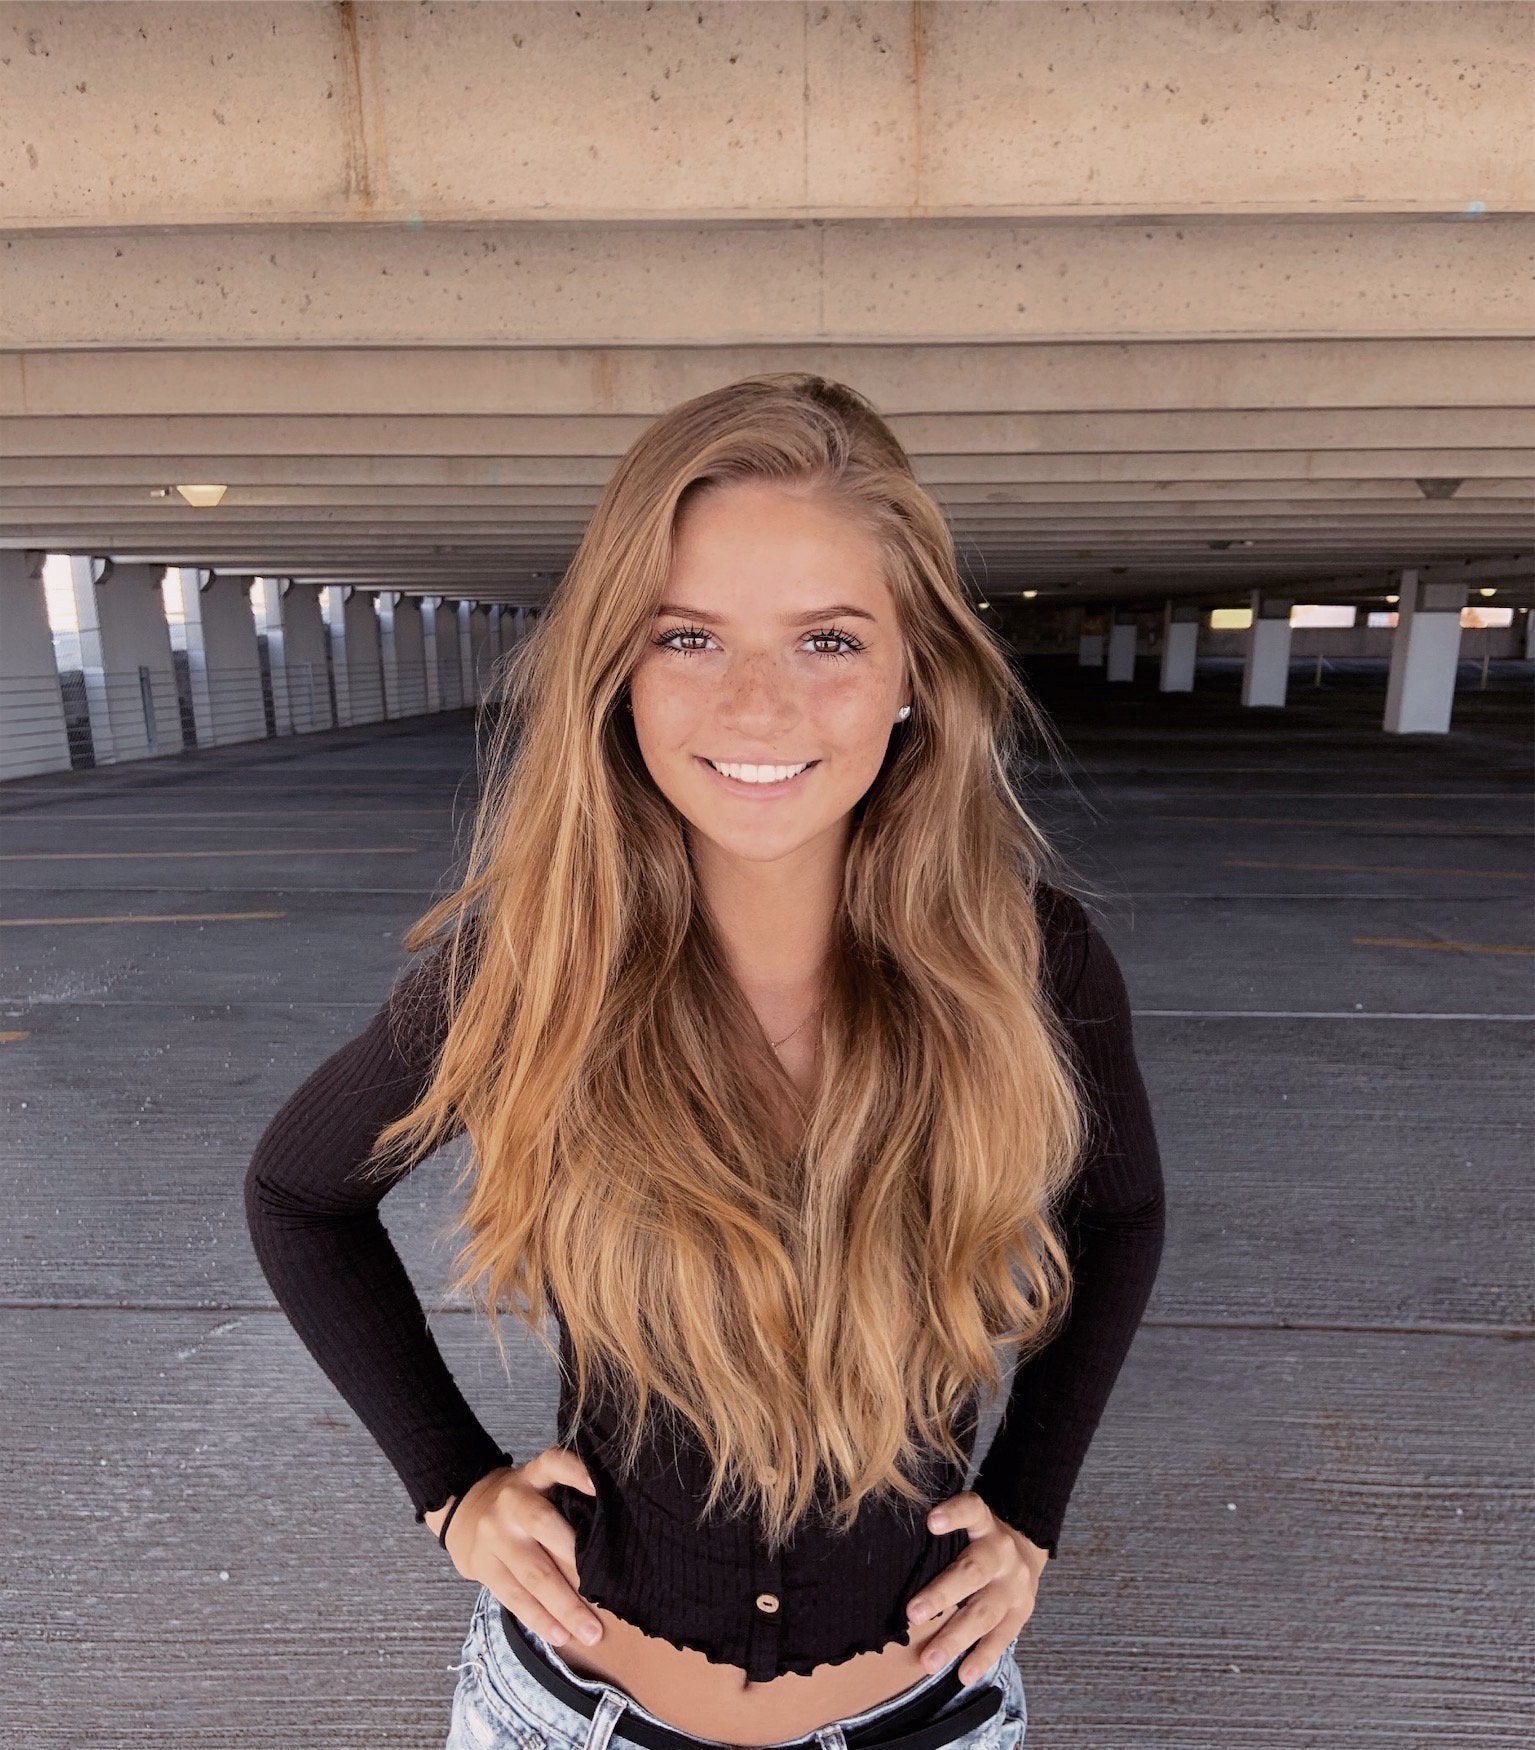 Women Brunette Long Hair Smiling Parking Garage Hands On Hips Looking